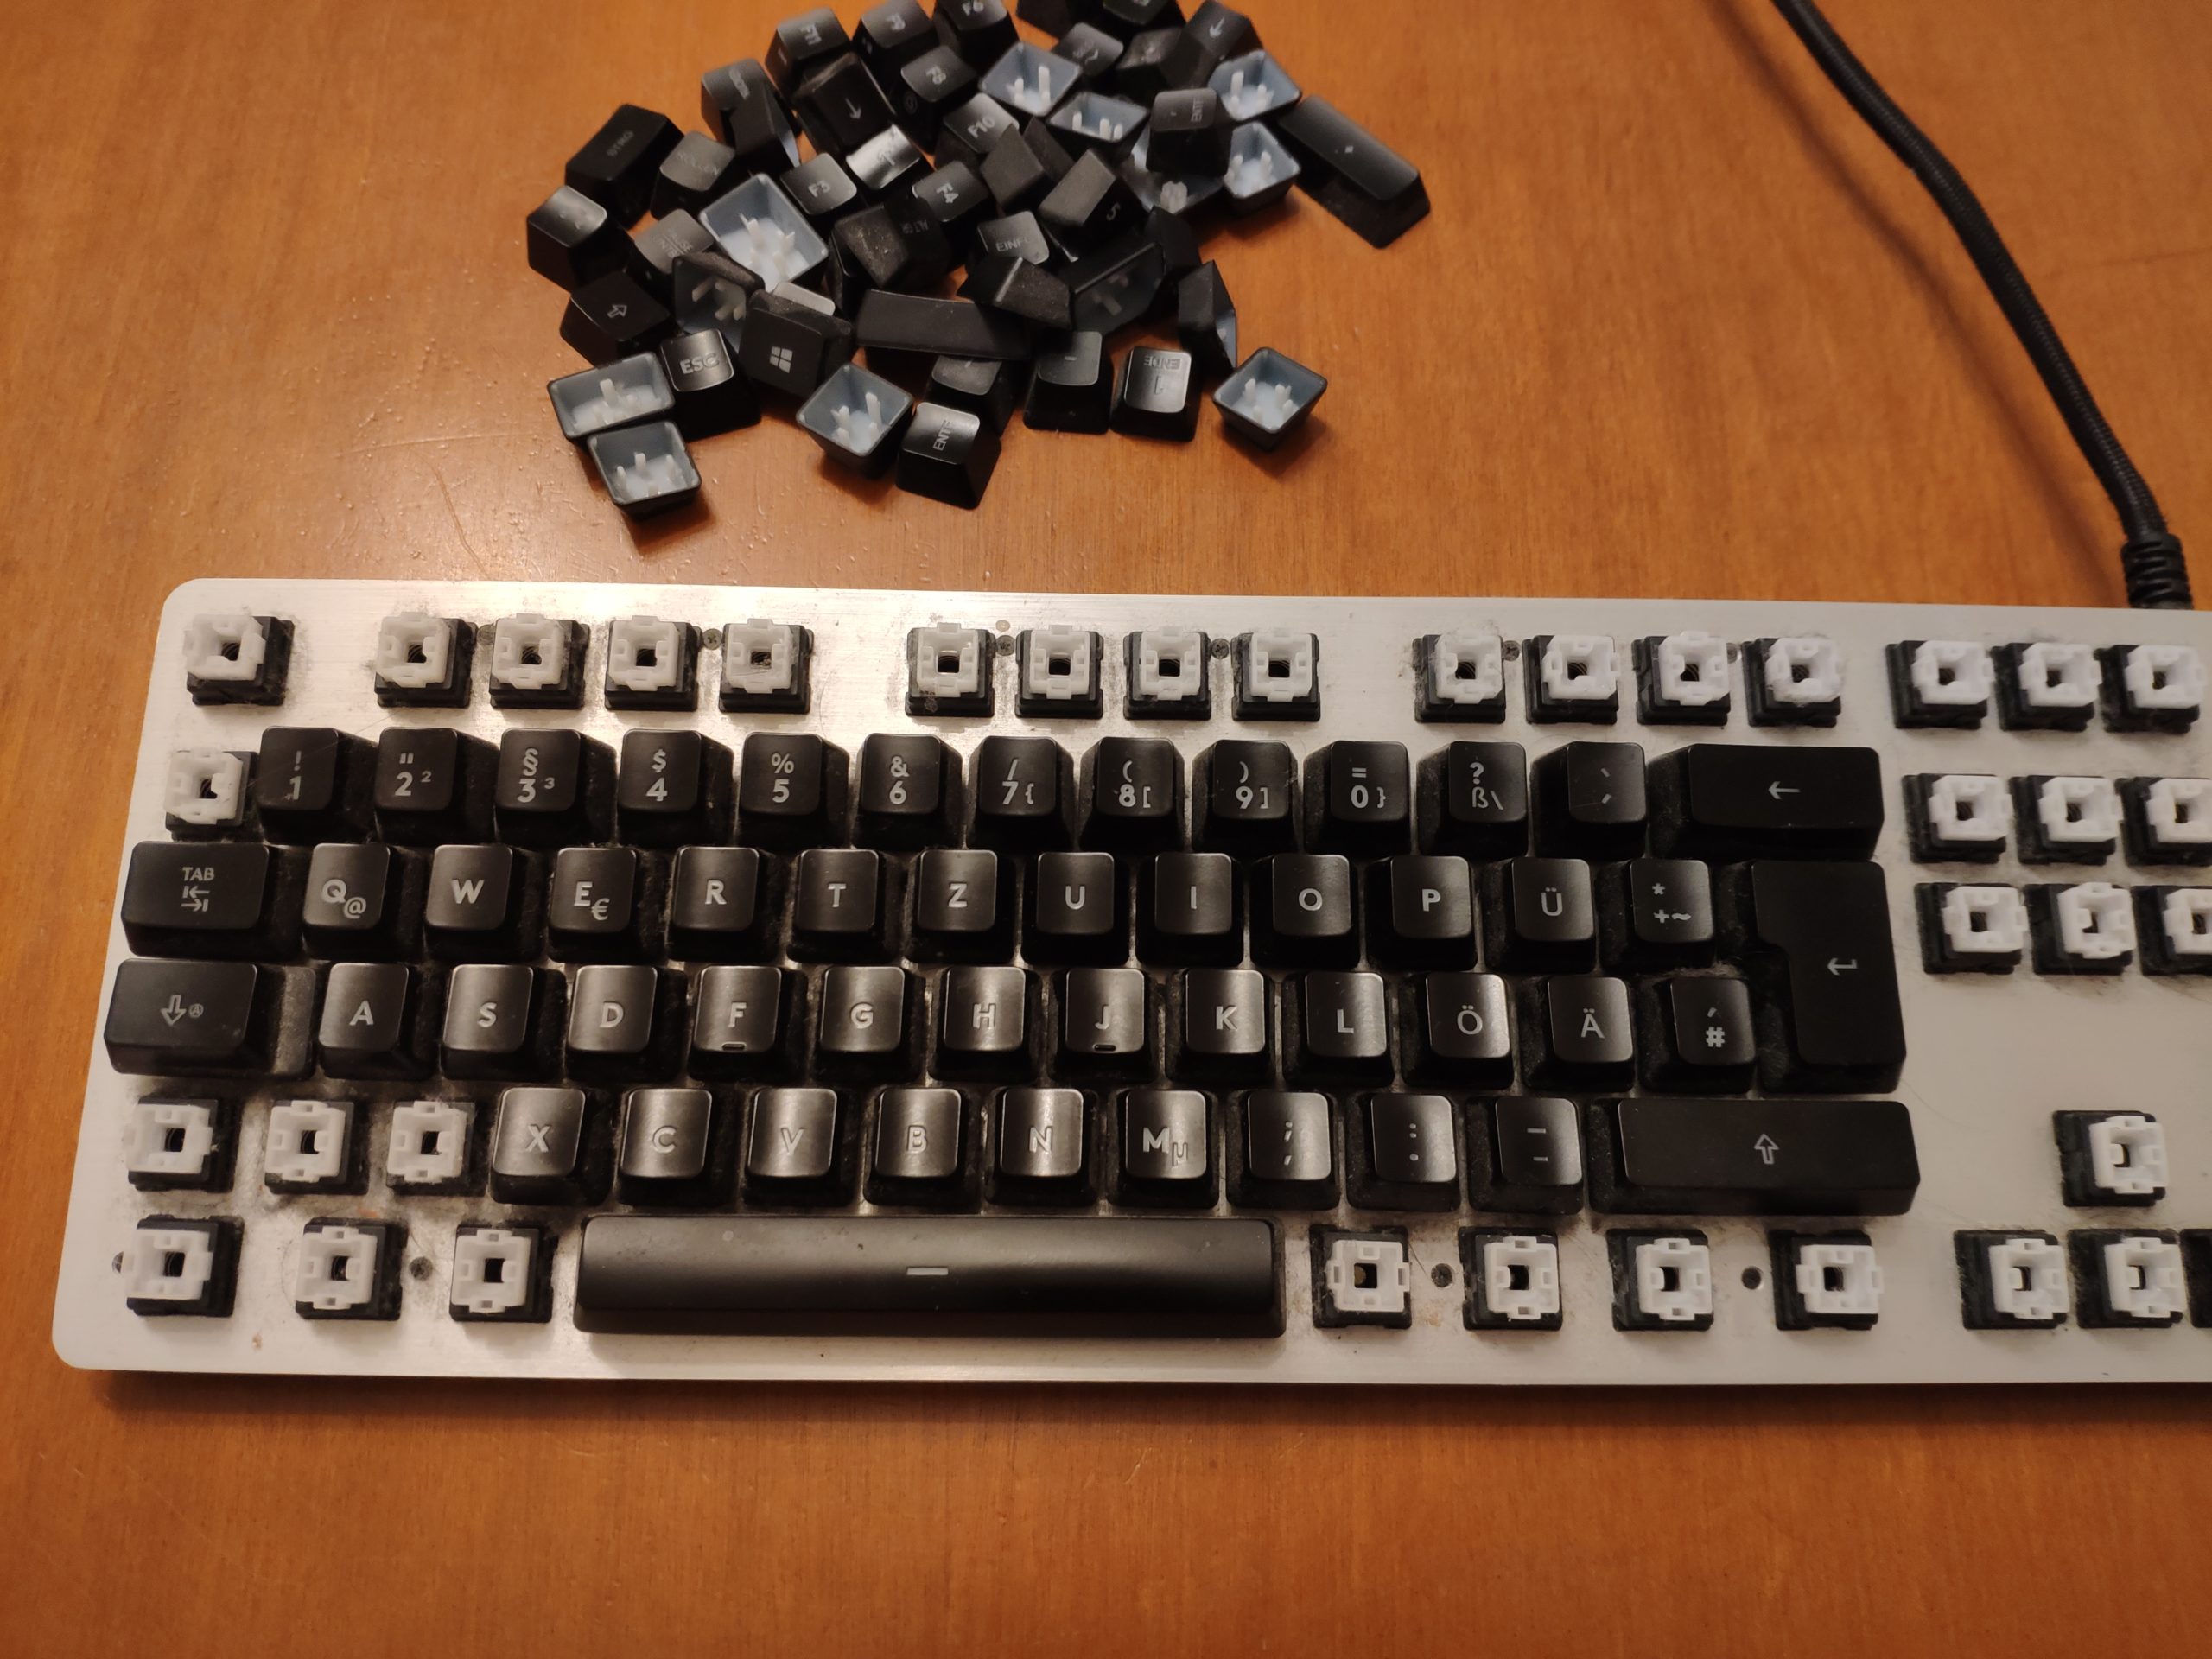 Guide: Clean a Keyboard